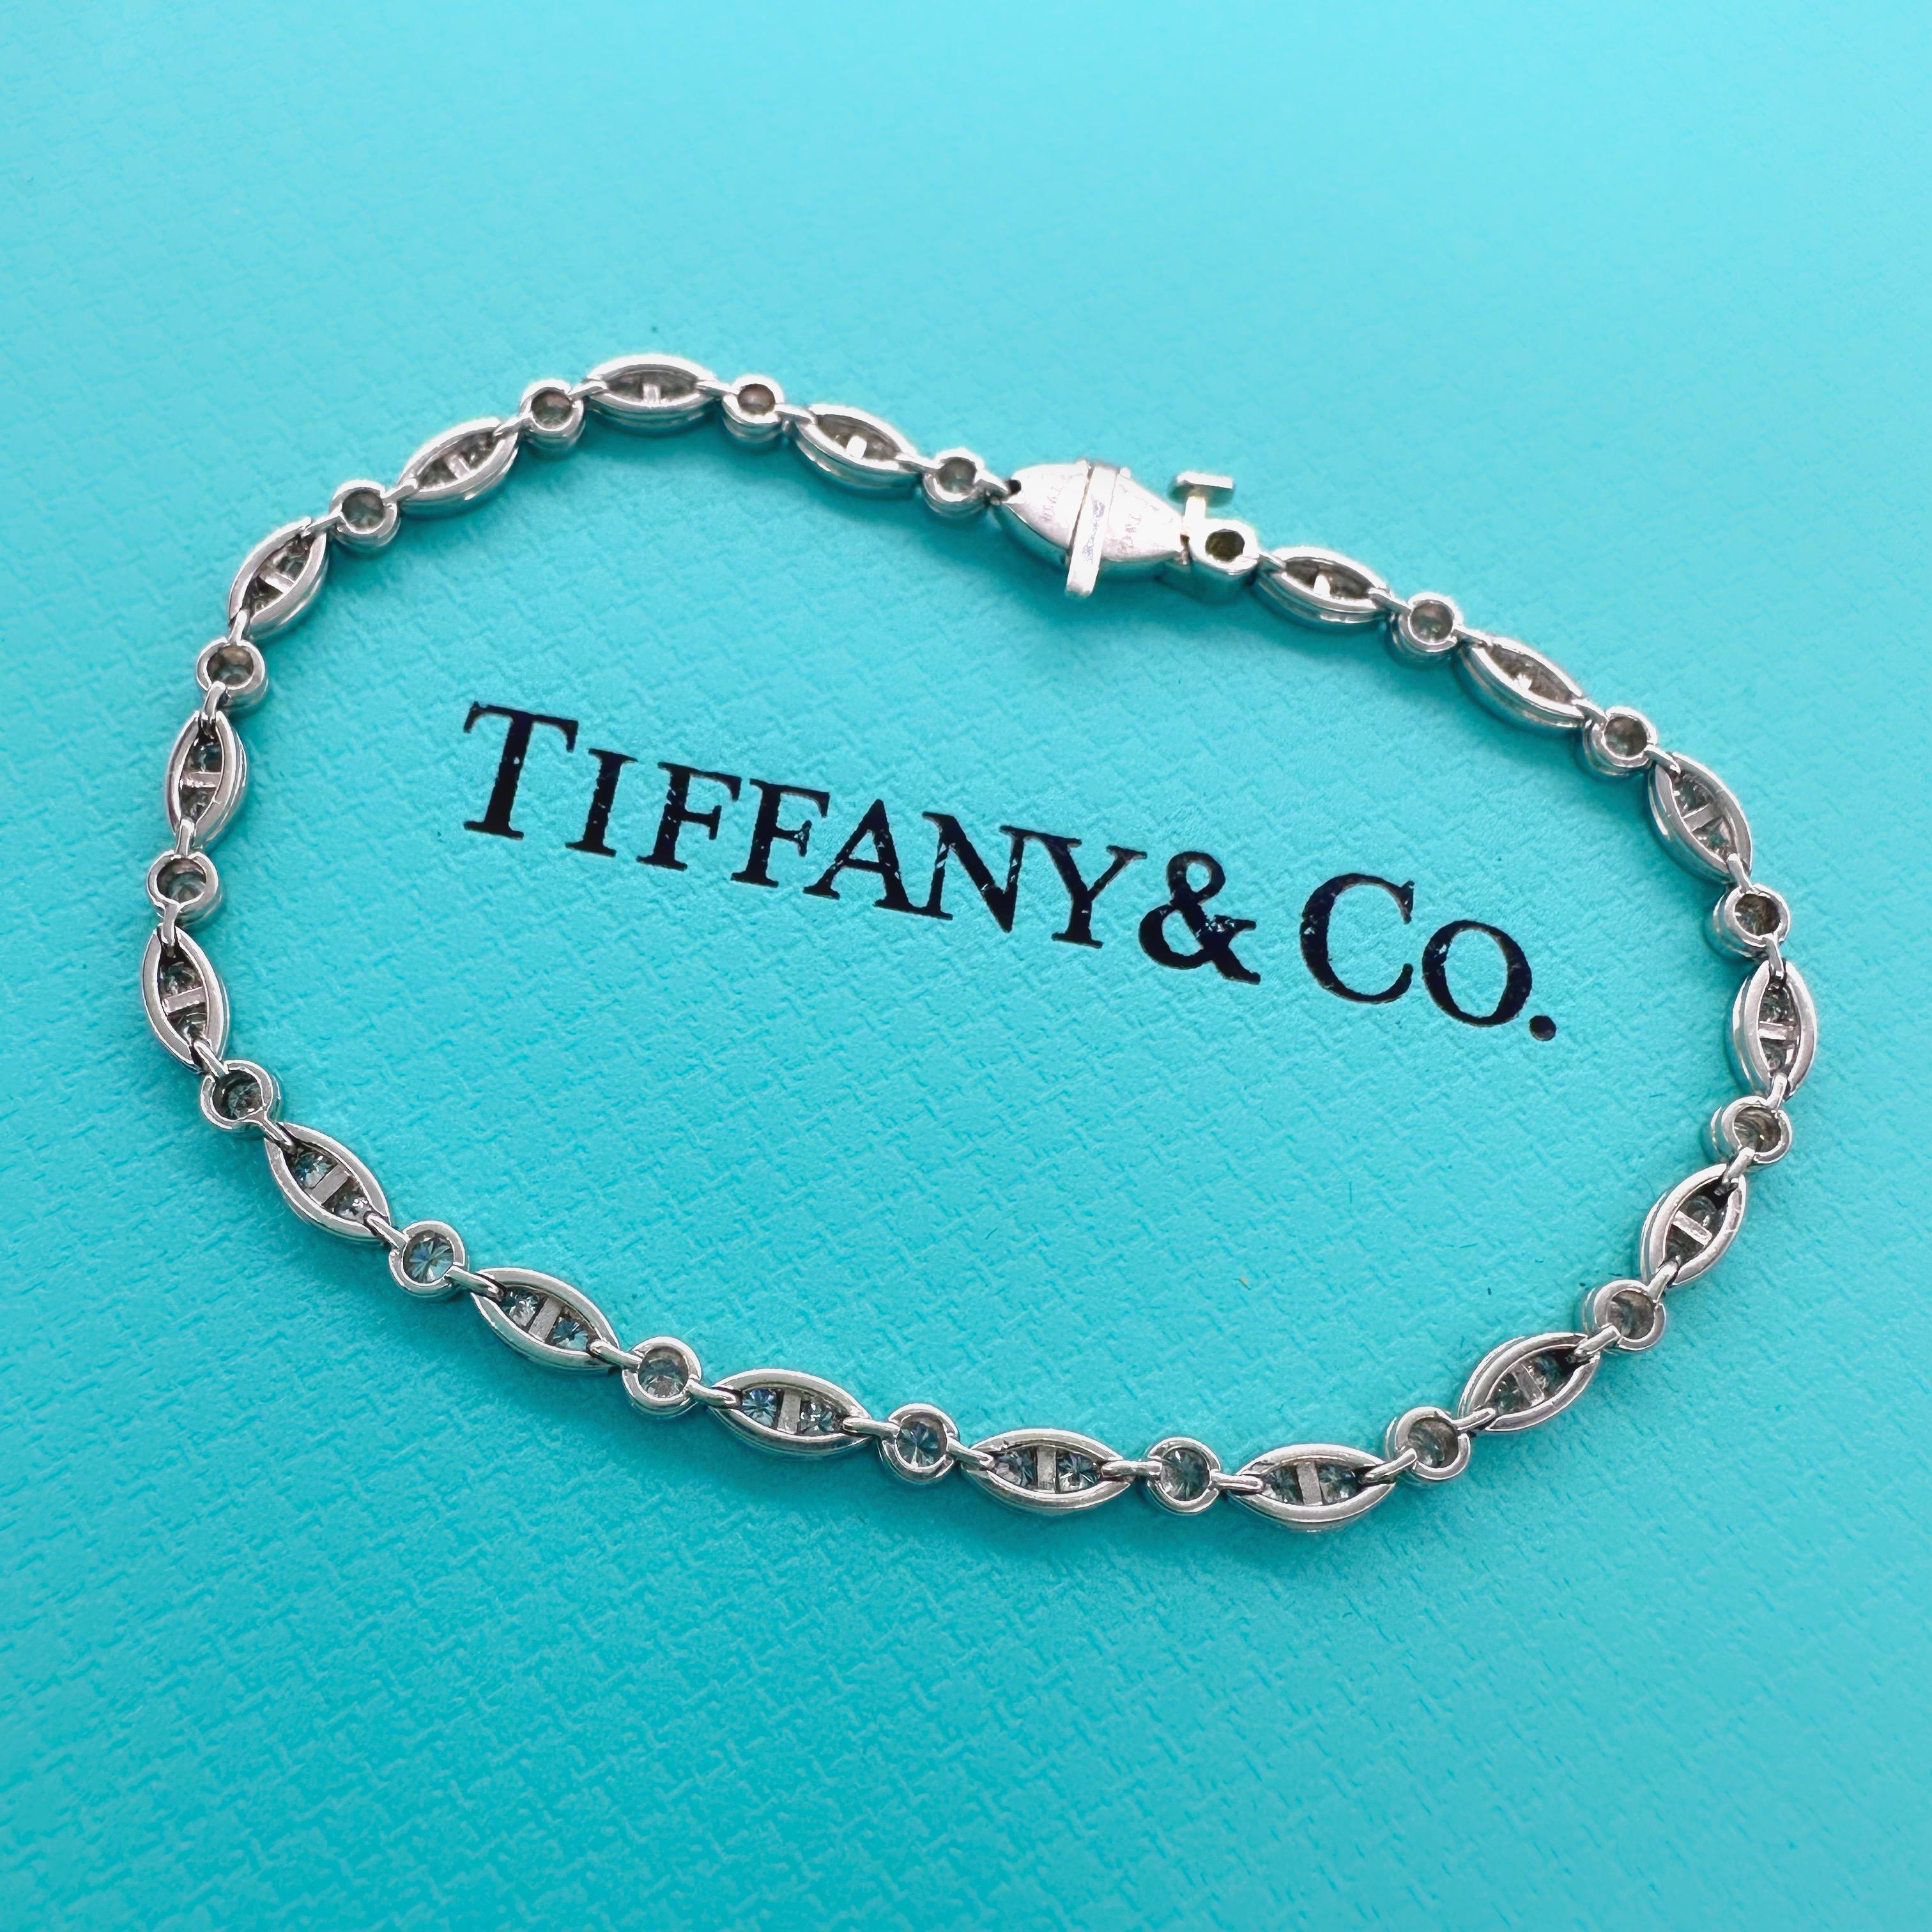 Tiffany & Co. Jazz Diamond Tennis Bracelet in Platinum
Style:  Tennis
Metal:  Platinum PT950
Size:  7' Inches
TCW:  1.60 tcw tcw
Main Diamond:  55 Round Brilliant Diamonds
Hallmark:  ©T&C PT950 on Clasp
Includes:  T&C Bracelet Box - Certified